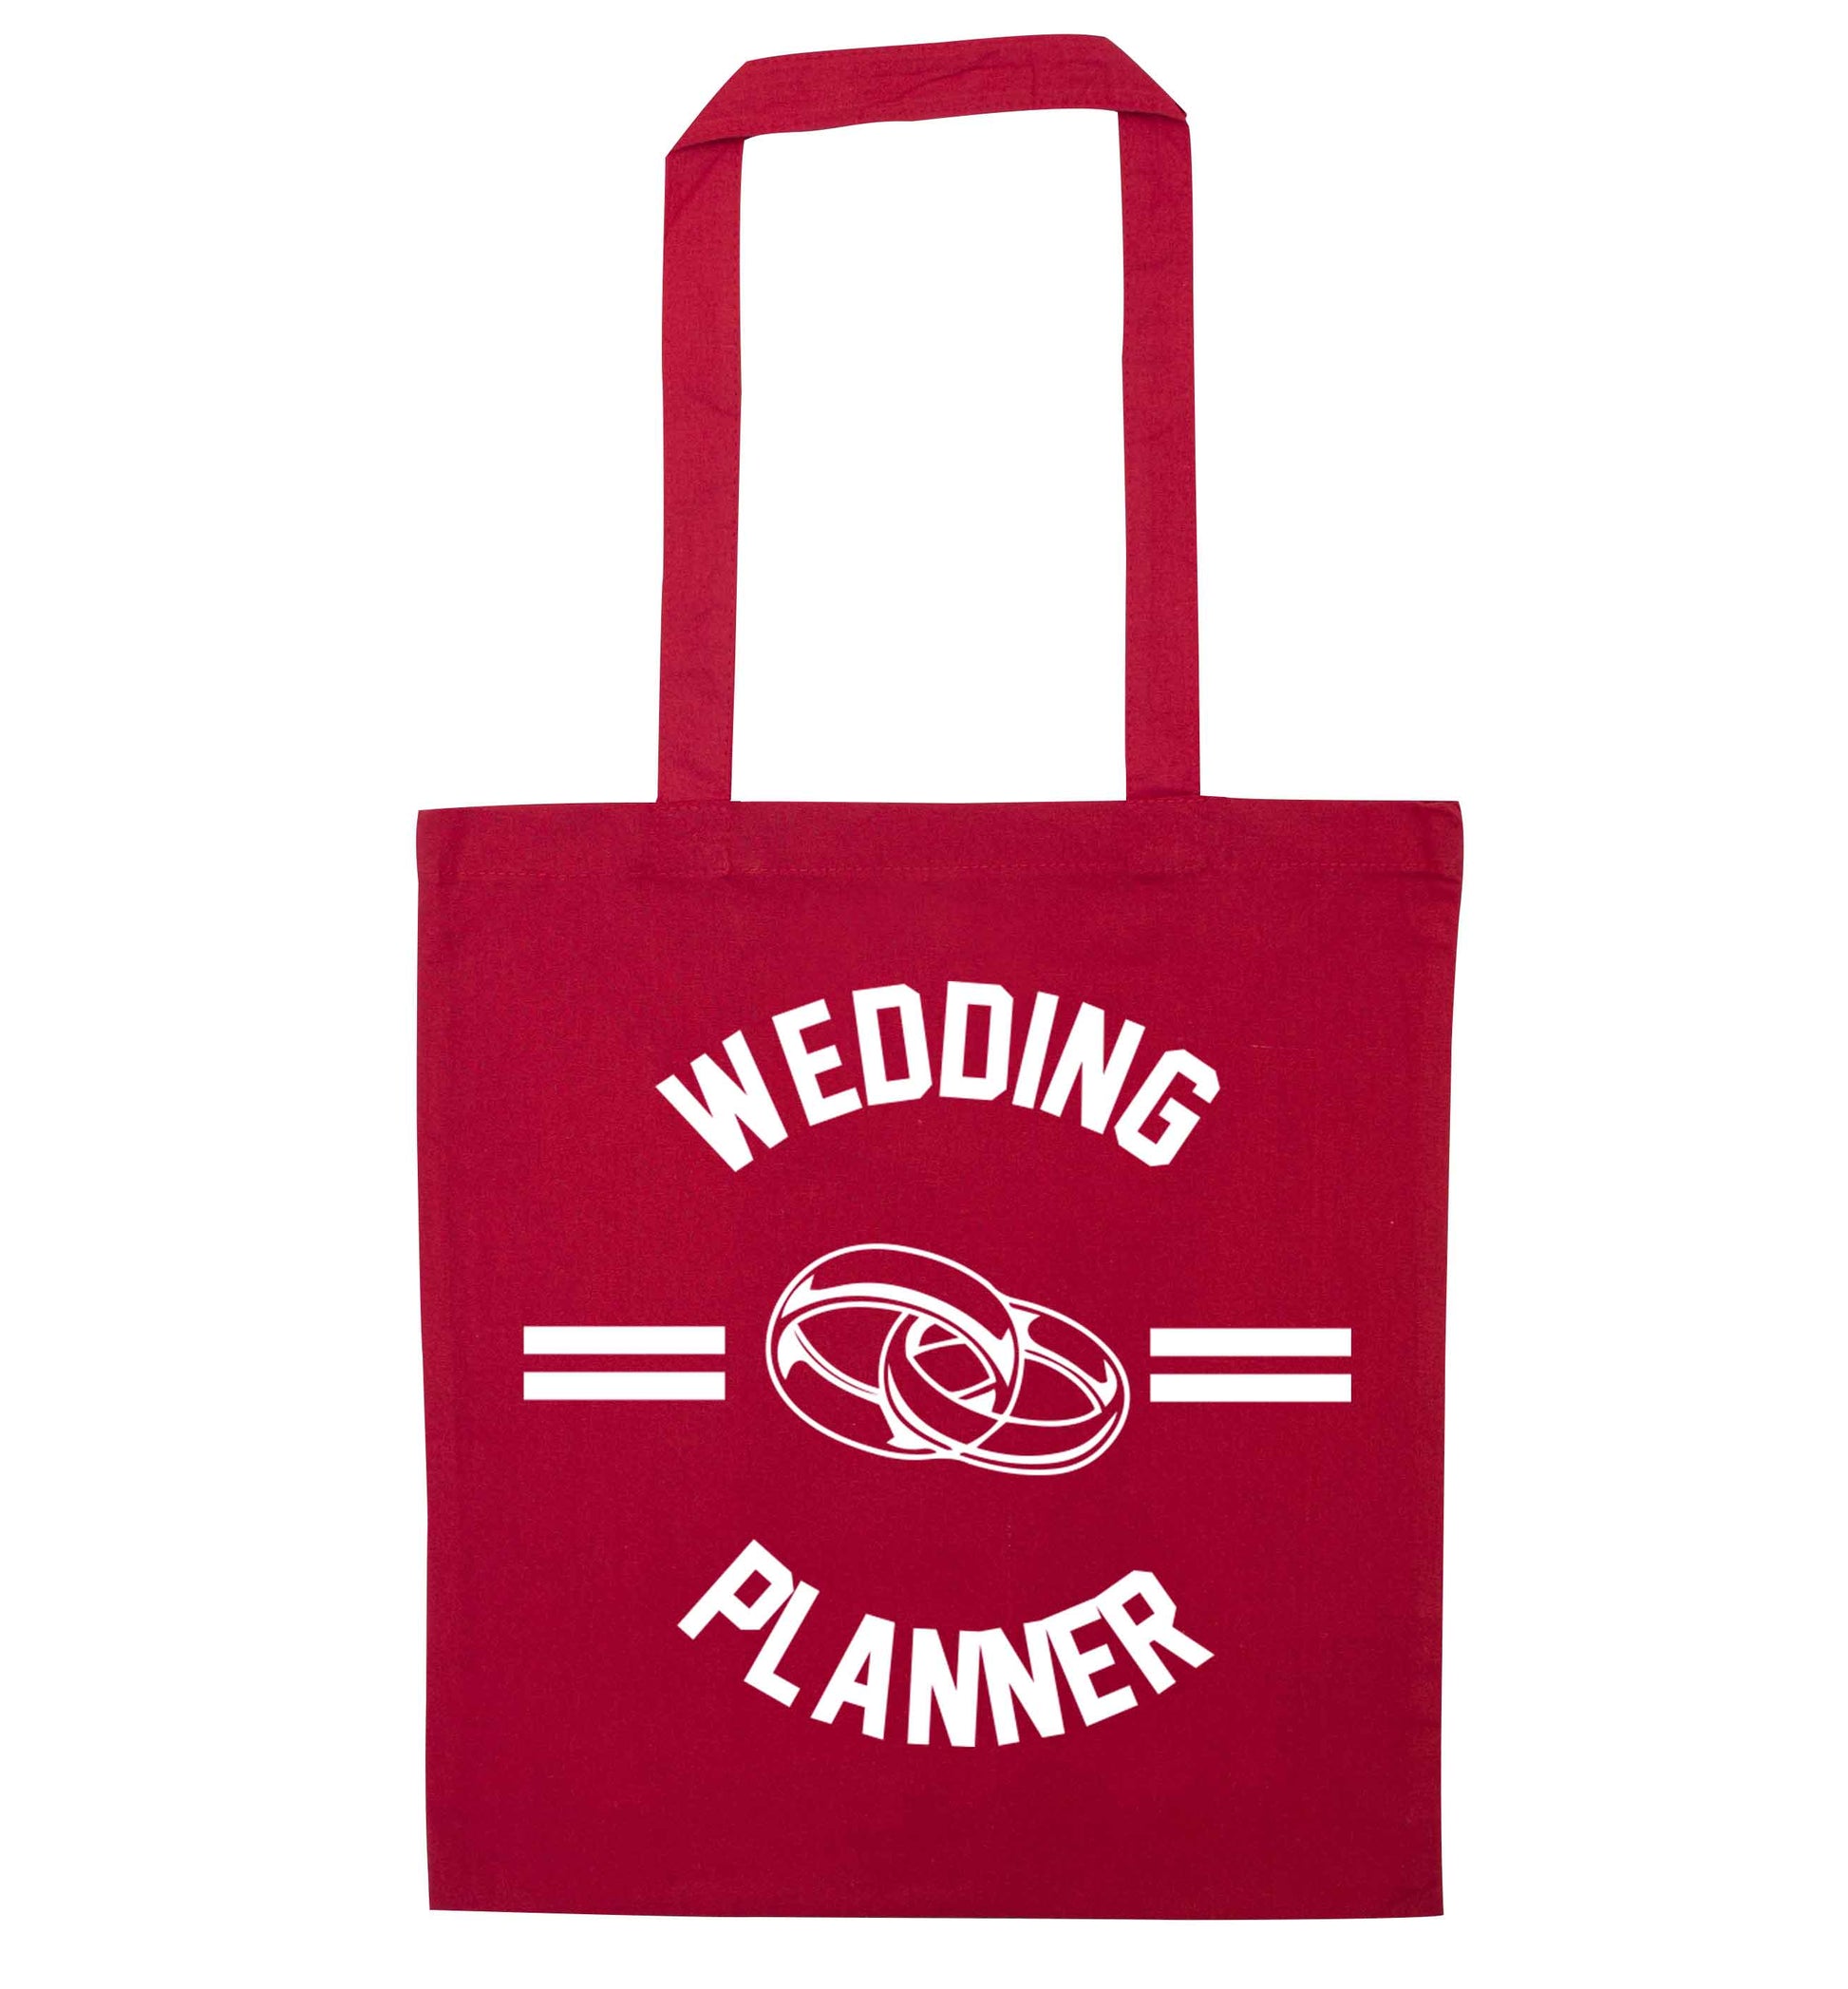 Wedding planner red tote bag